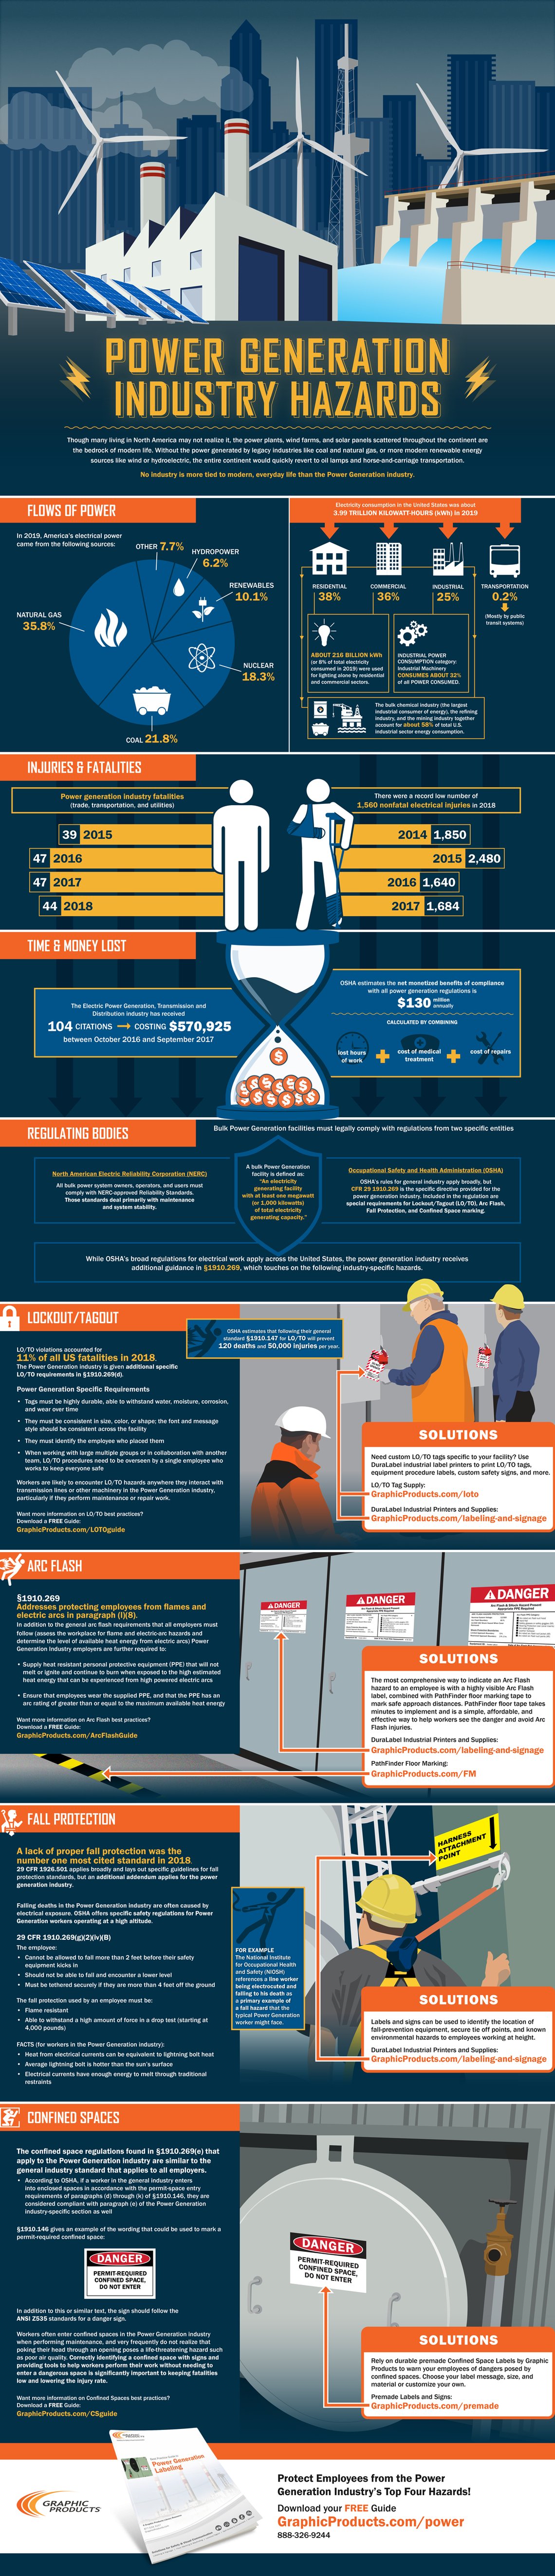 power-generation-industry-hazards-infographic